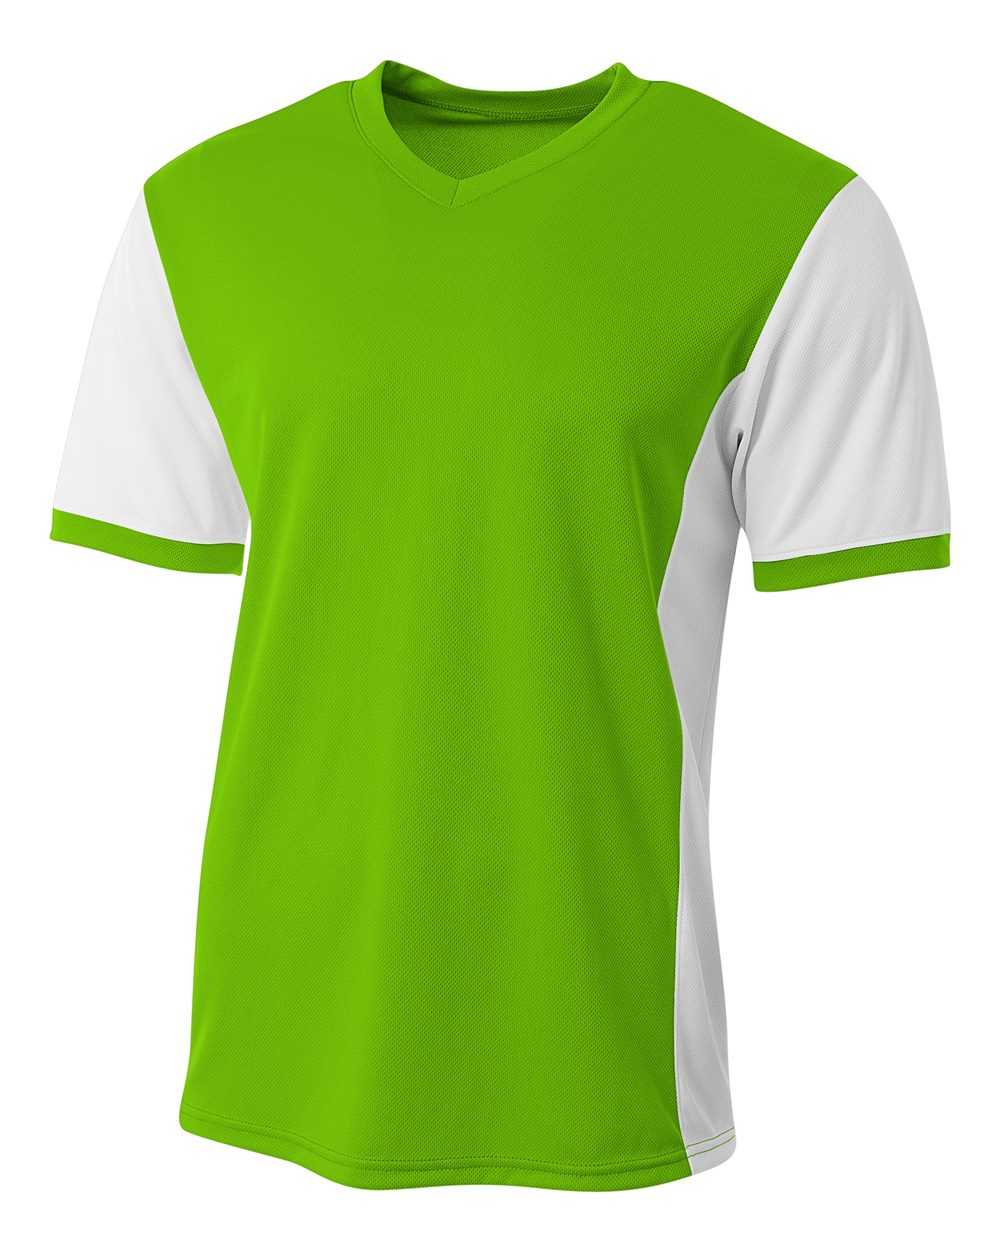 A4 NB3017 Premier Soccer Jersey - Lime White - HIT a Double